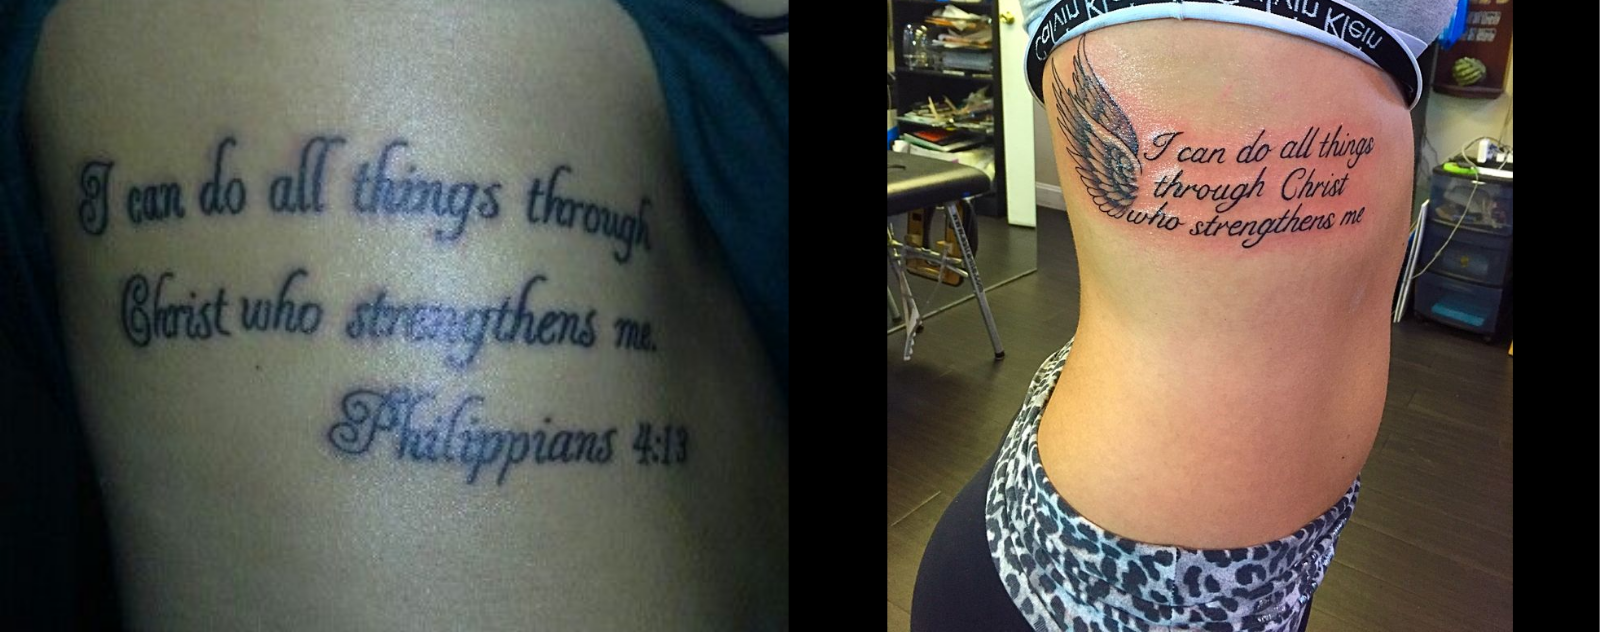 40 Philippians 413 Tattoo Designs For Men  Bible Verse Ideas